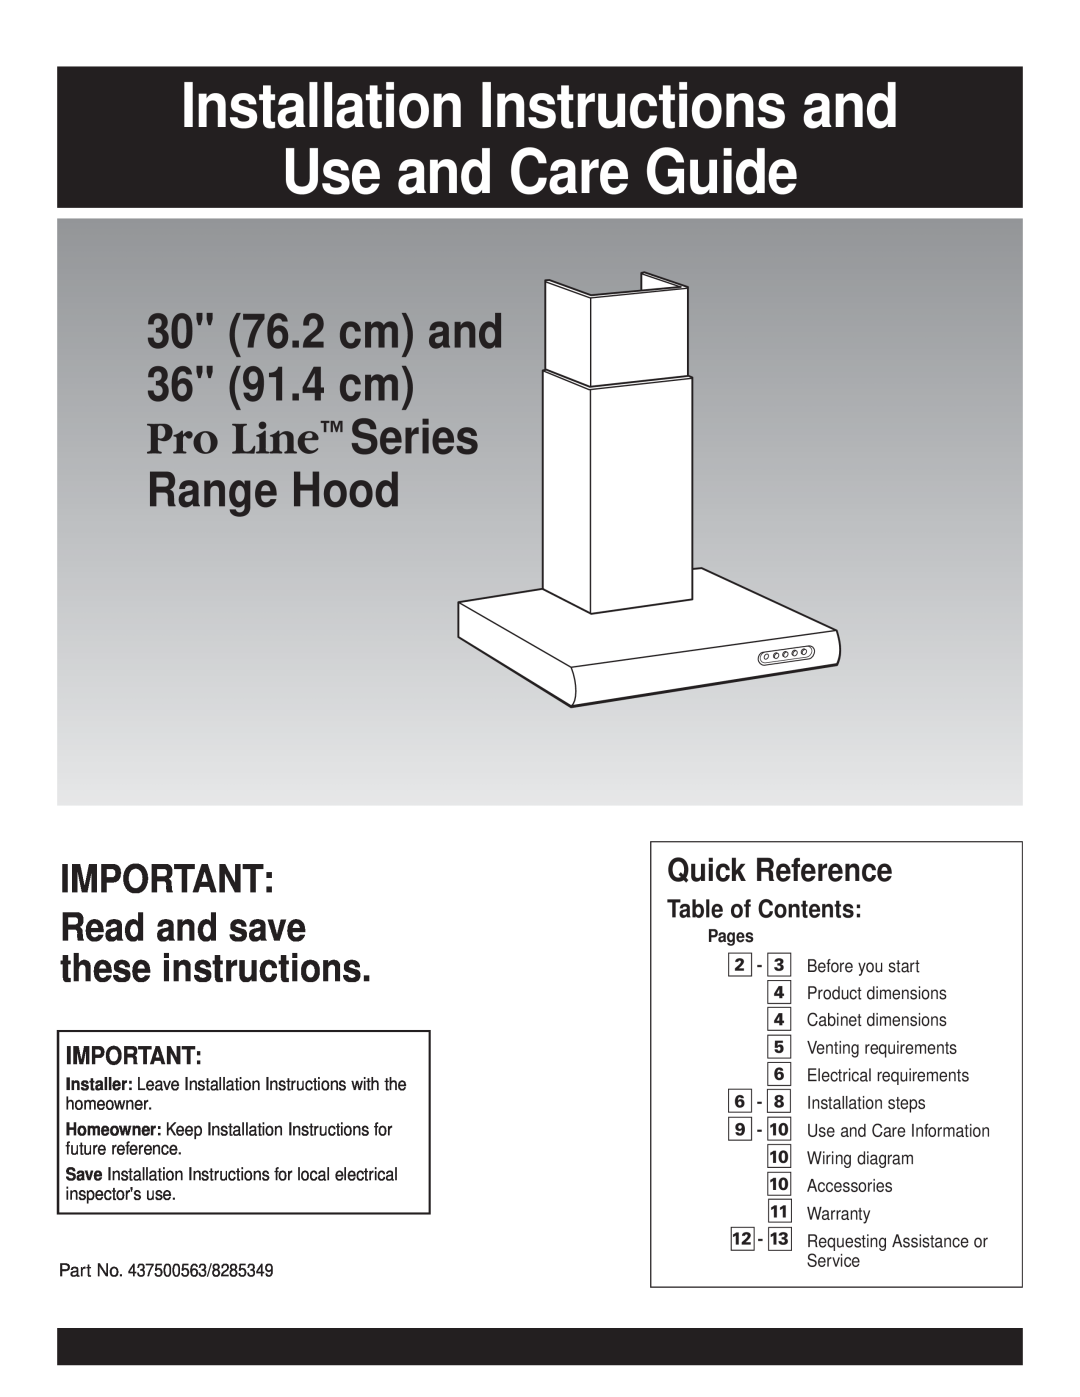 KitchenAid Pro Line Series installation instructions Installation Instructions and Use and Care Guide, Range Hood, Pages 